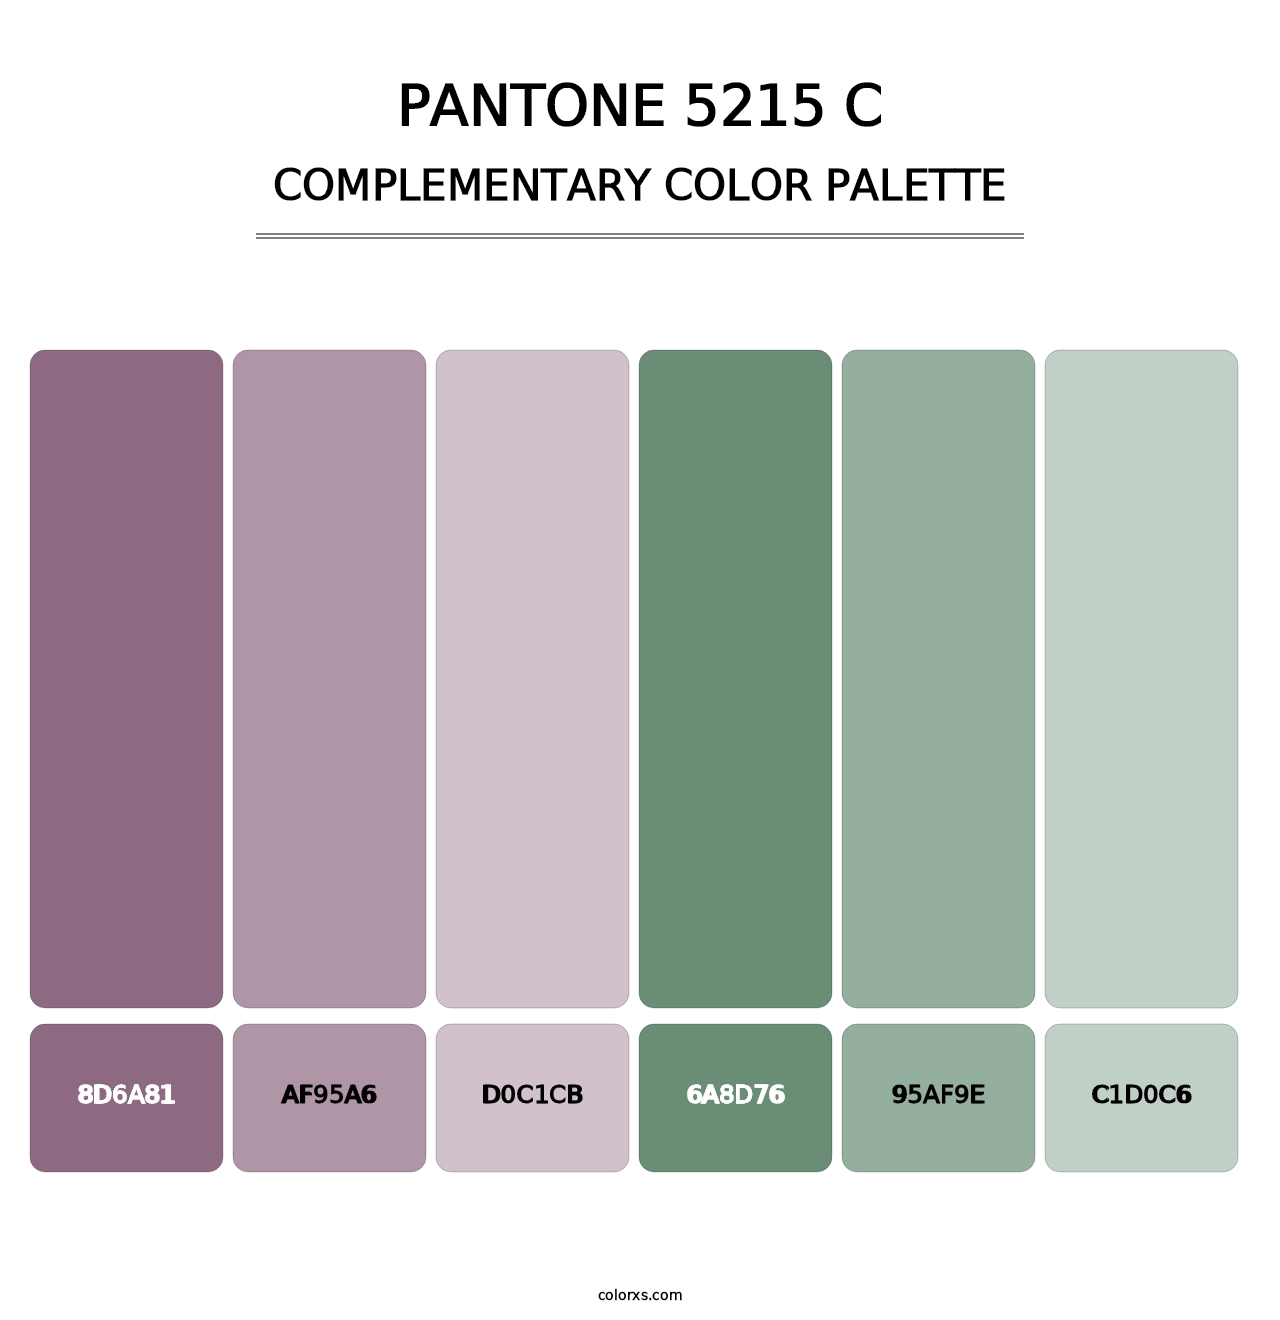 PANTONE 5215 C - Complementary Color Palette